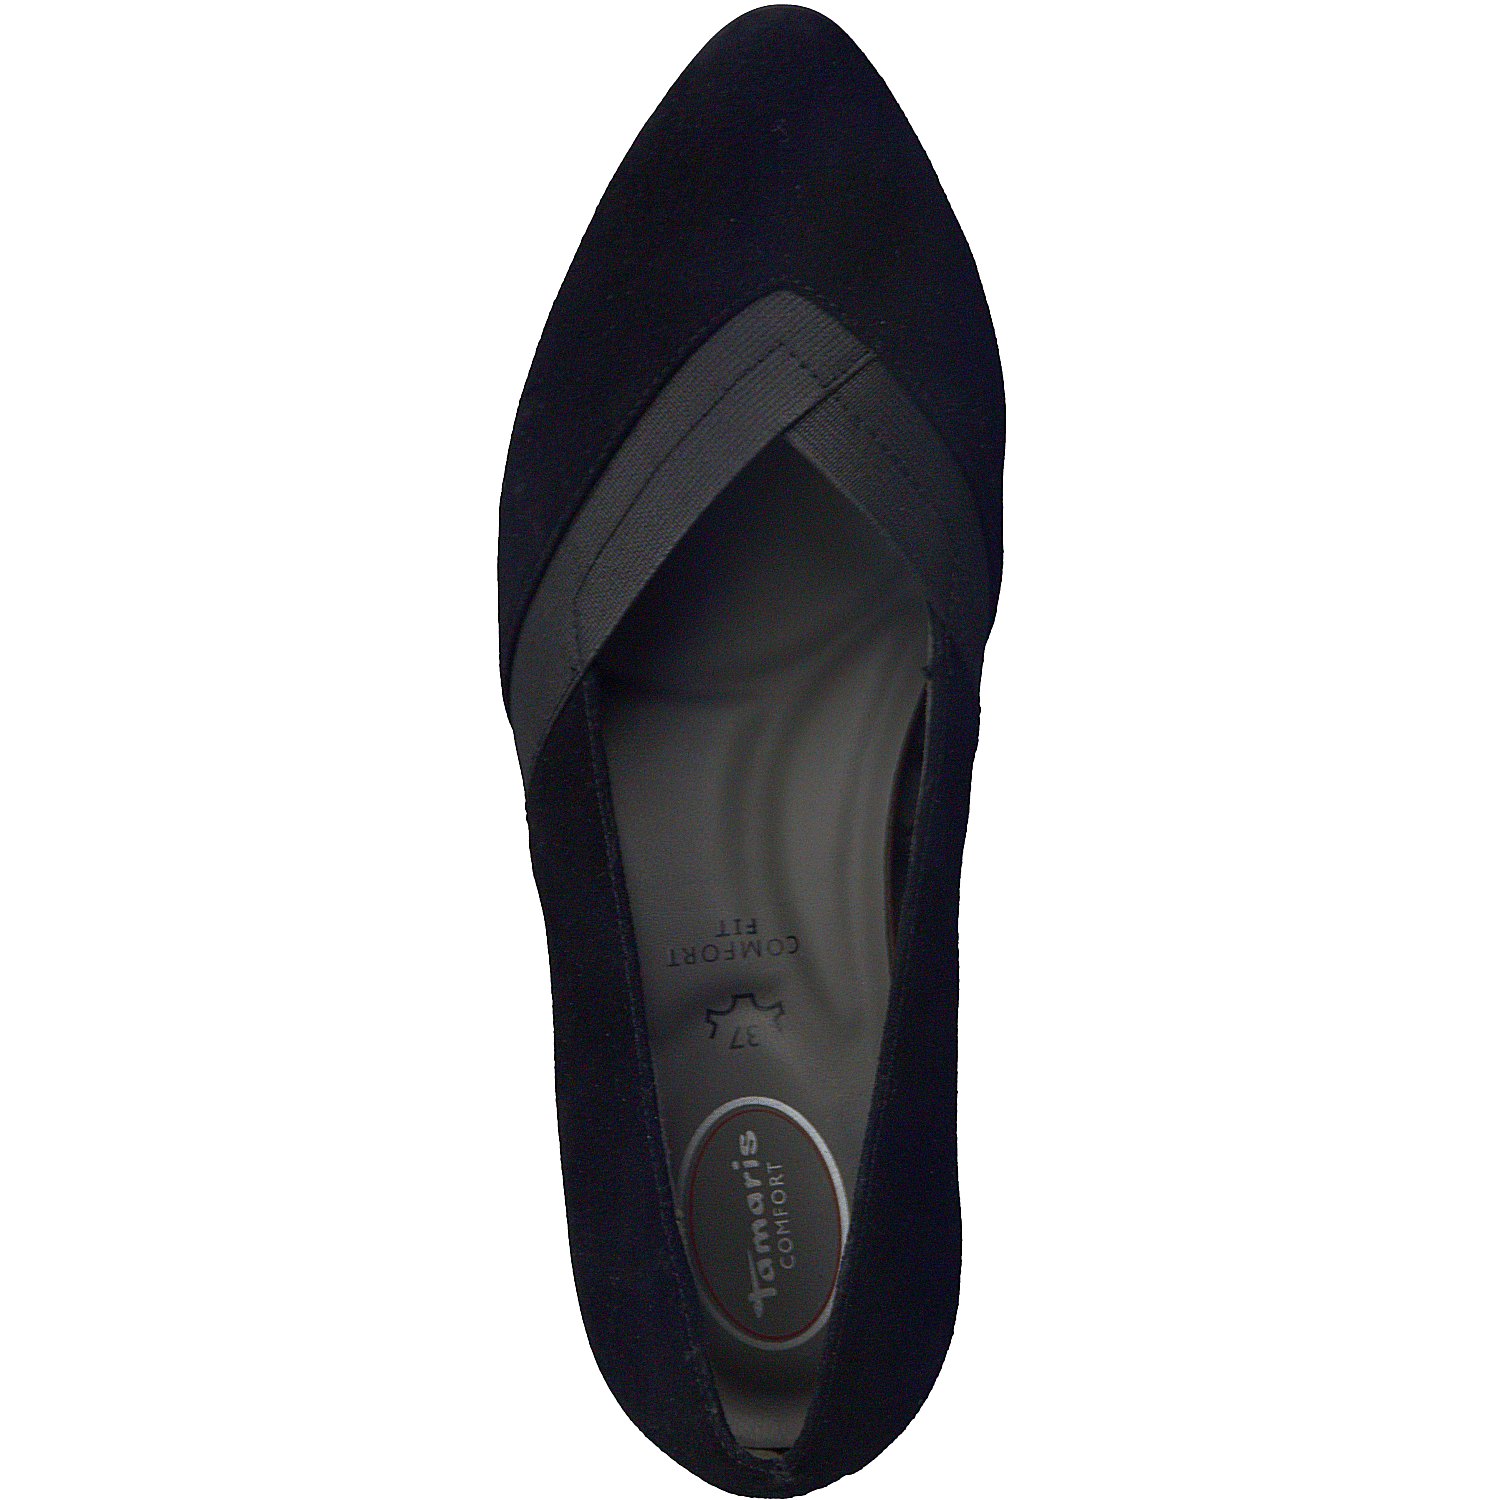 Tamaris 8-84306  - Ladies Court Shoe in Black Suede | Tamaris | Wisemans | Bantry | Shoe Shop | West Cork | Munster | Ireland